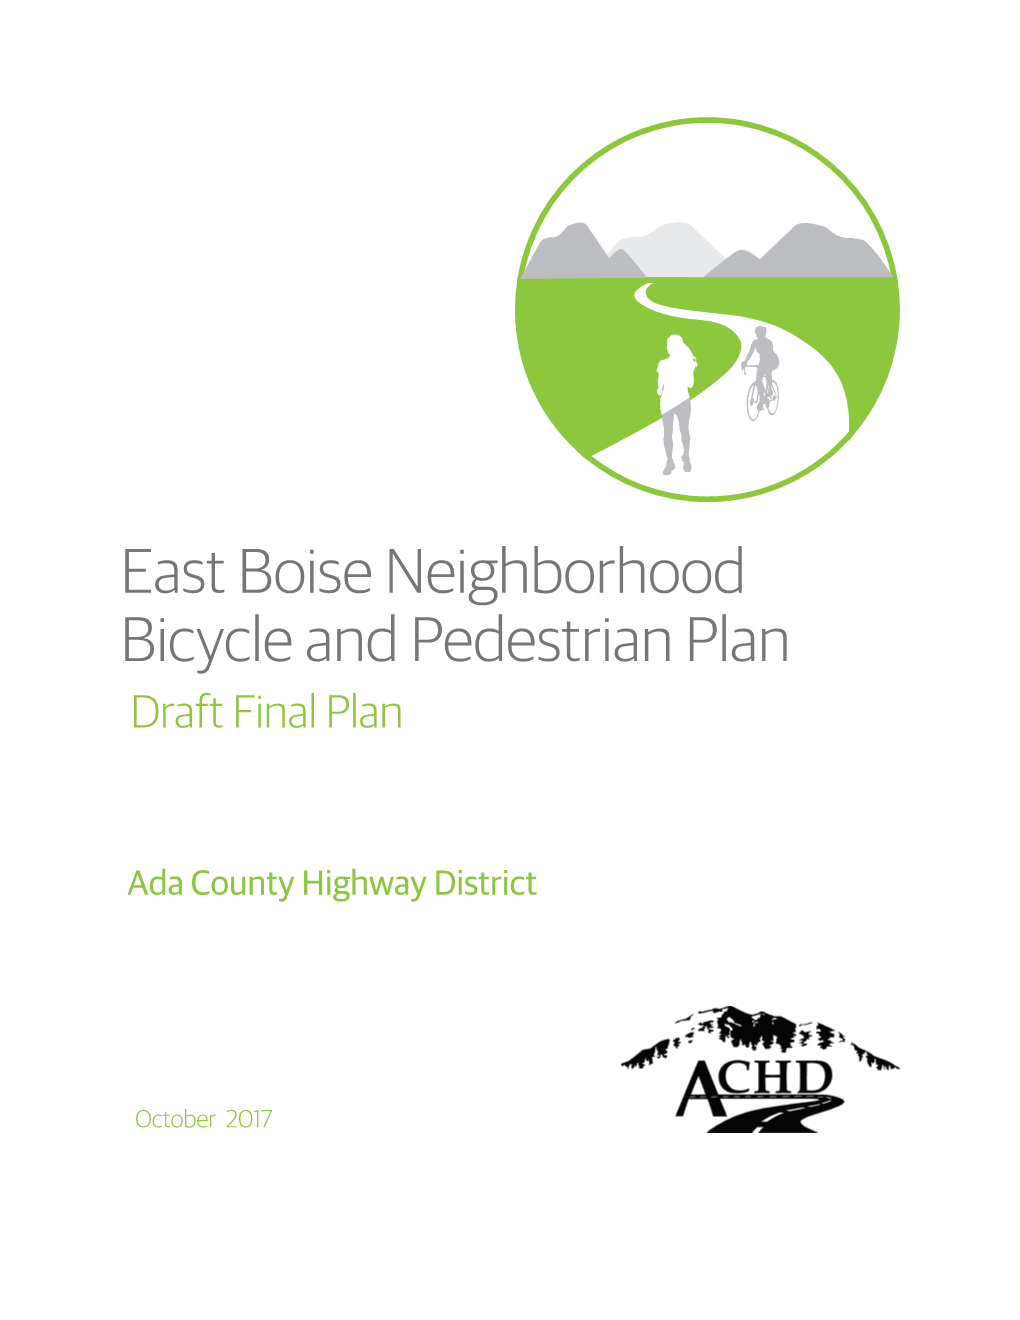 East Boise Neighborhood Bicycle and Pedestrian Plan Draft Final Plan